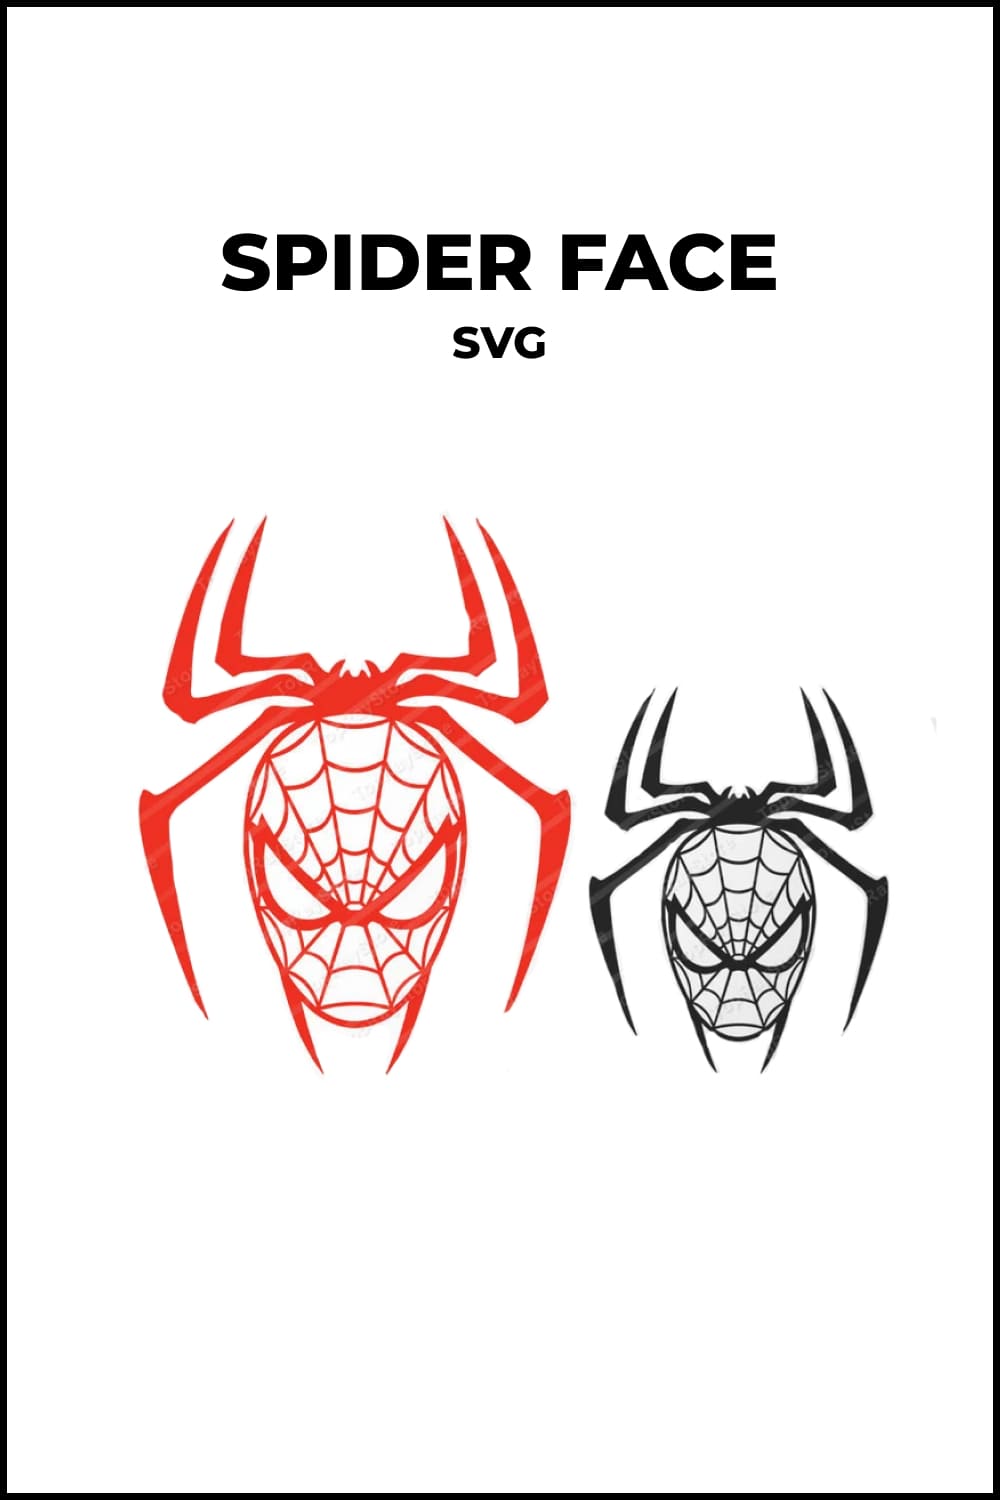 Spiderman Face in spider SVG.